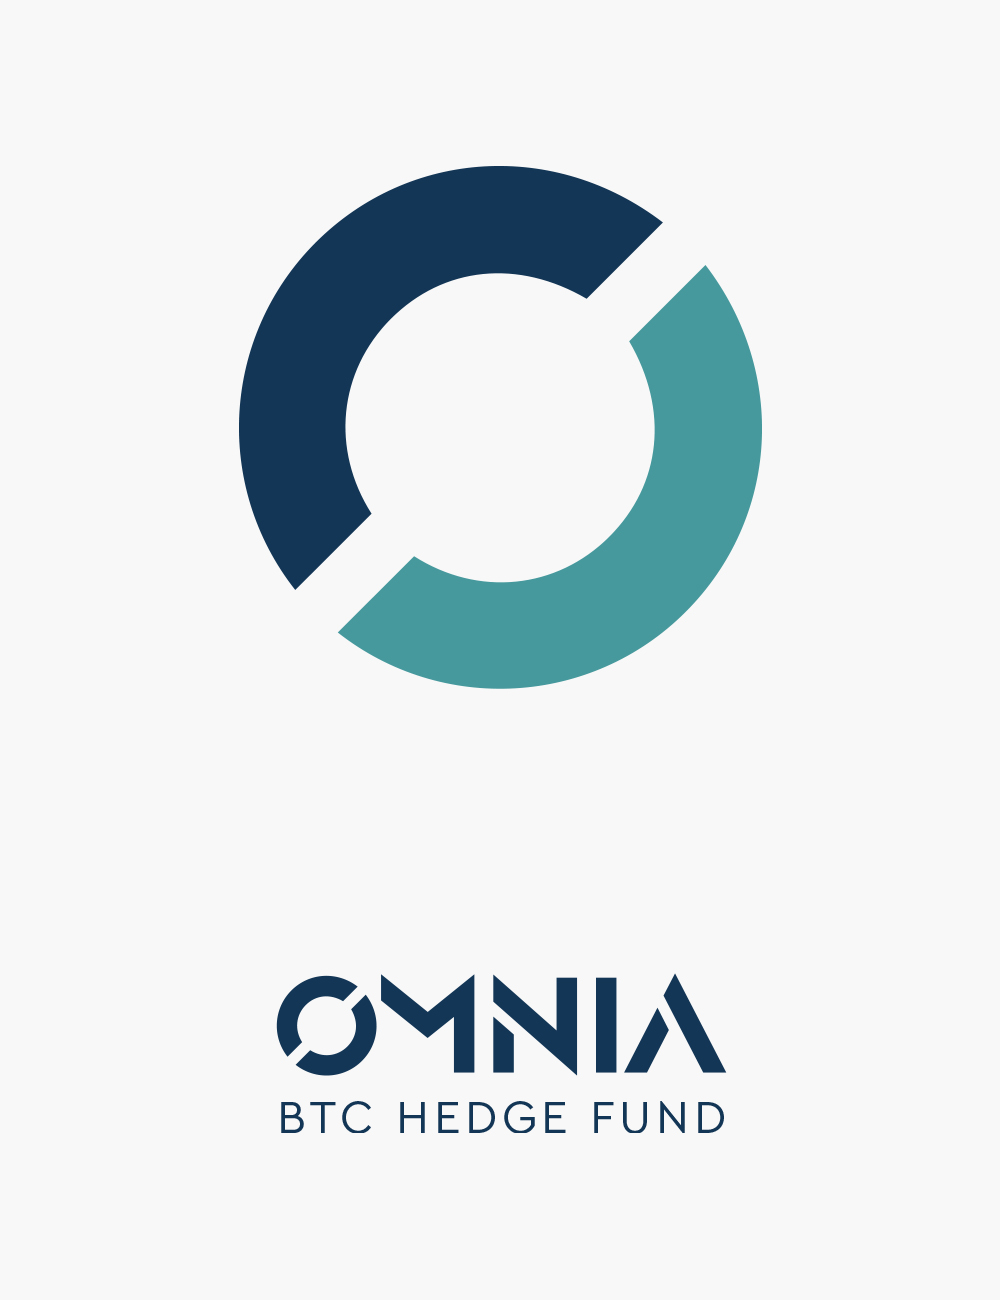 OMNIA BTC hedge fund